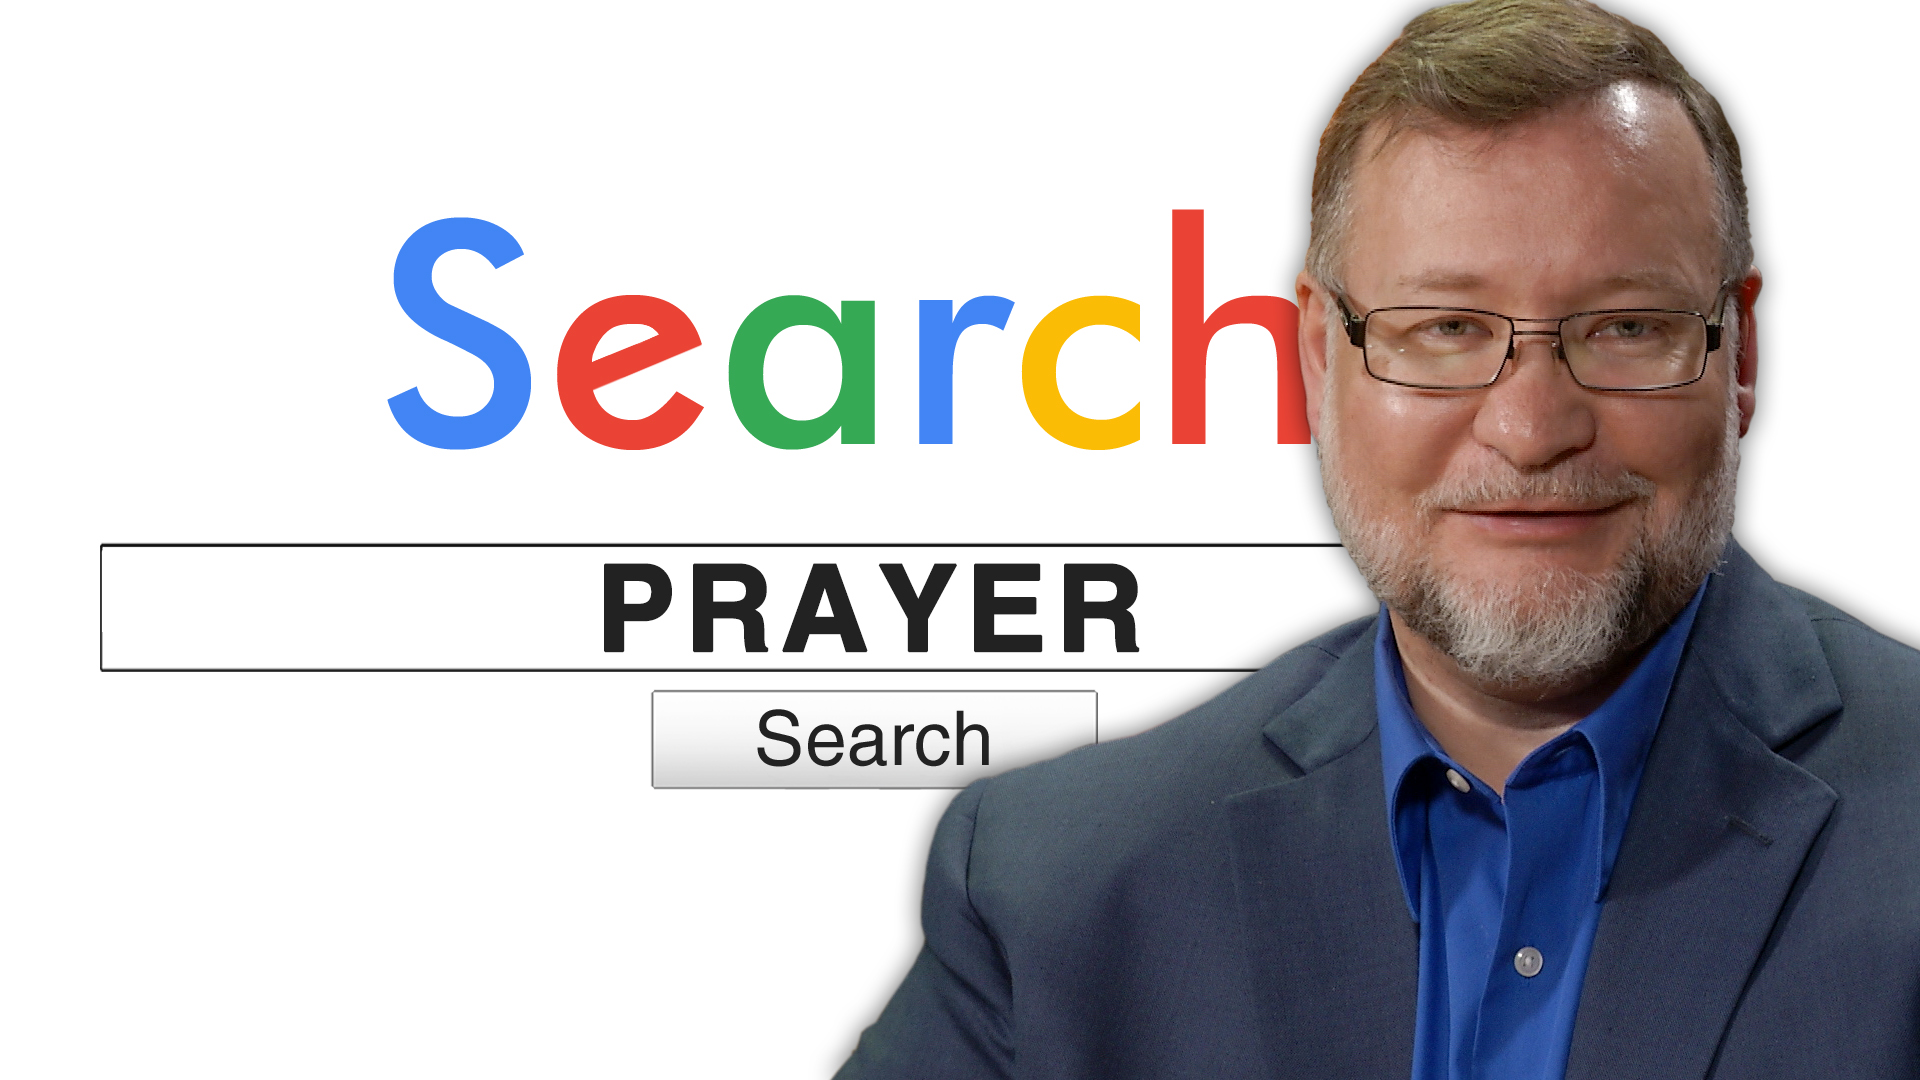 Search Prayer